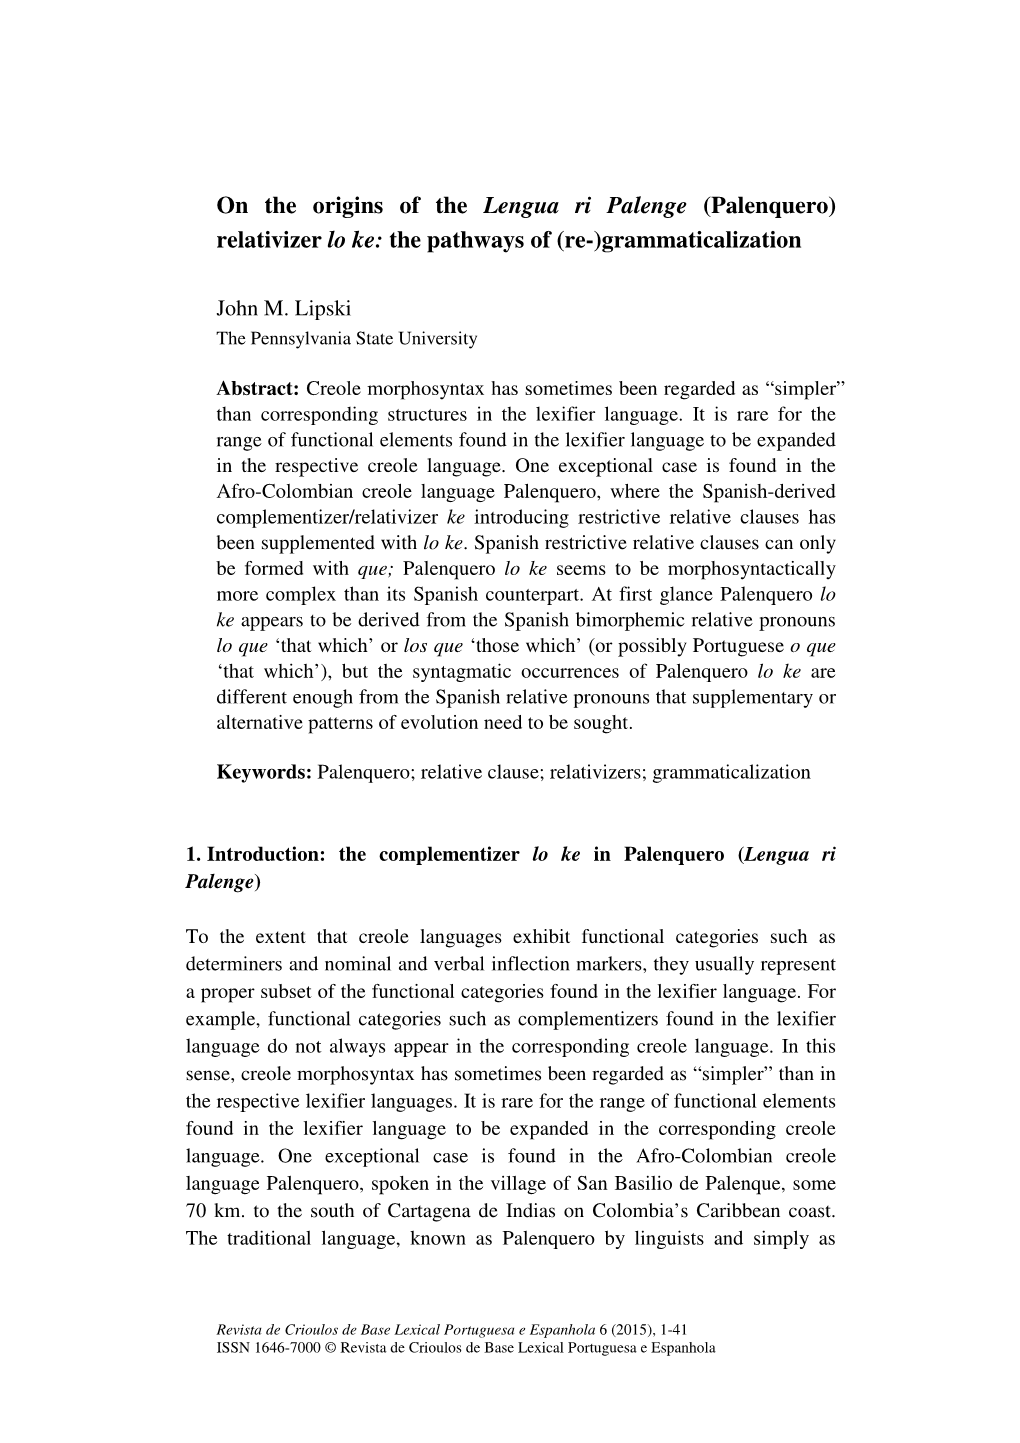 On the Origins of the Lengua Ri Palenge (Palenquero) Relativizer Lo Ke: the Pathways of (Re-)Grammaticalization